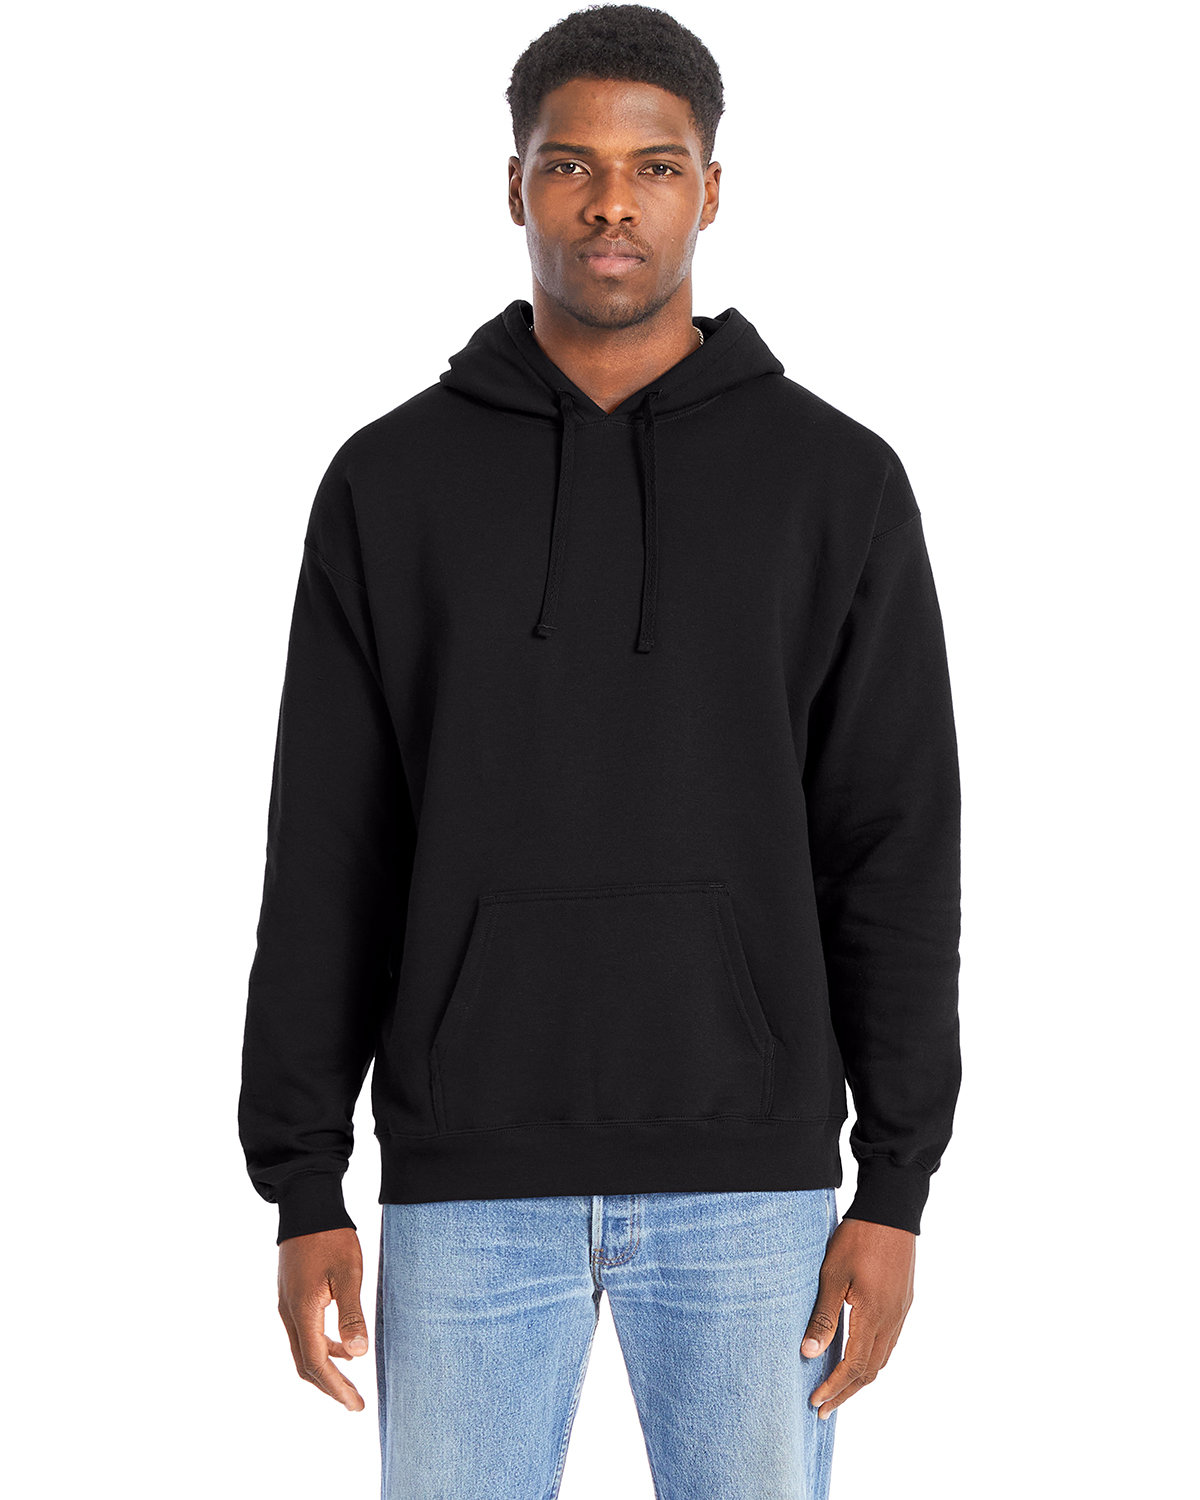 Hanes Perfect Sweats Pullover Hooded Sweatshirt BLACK 